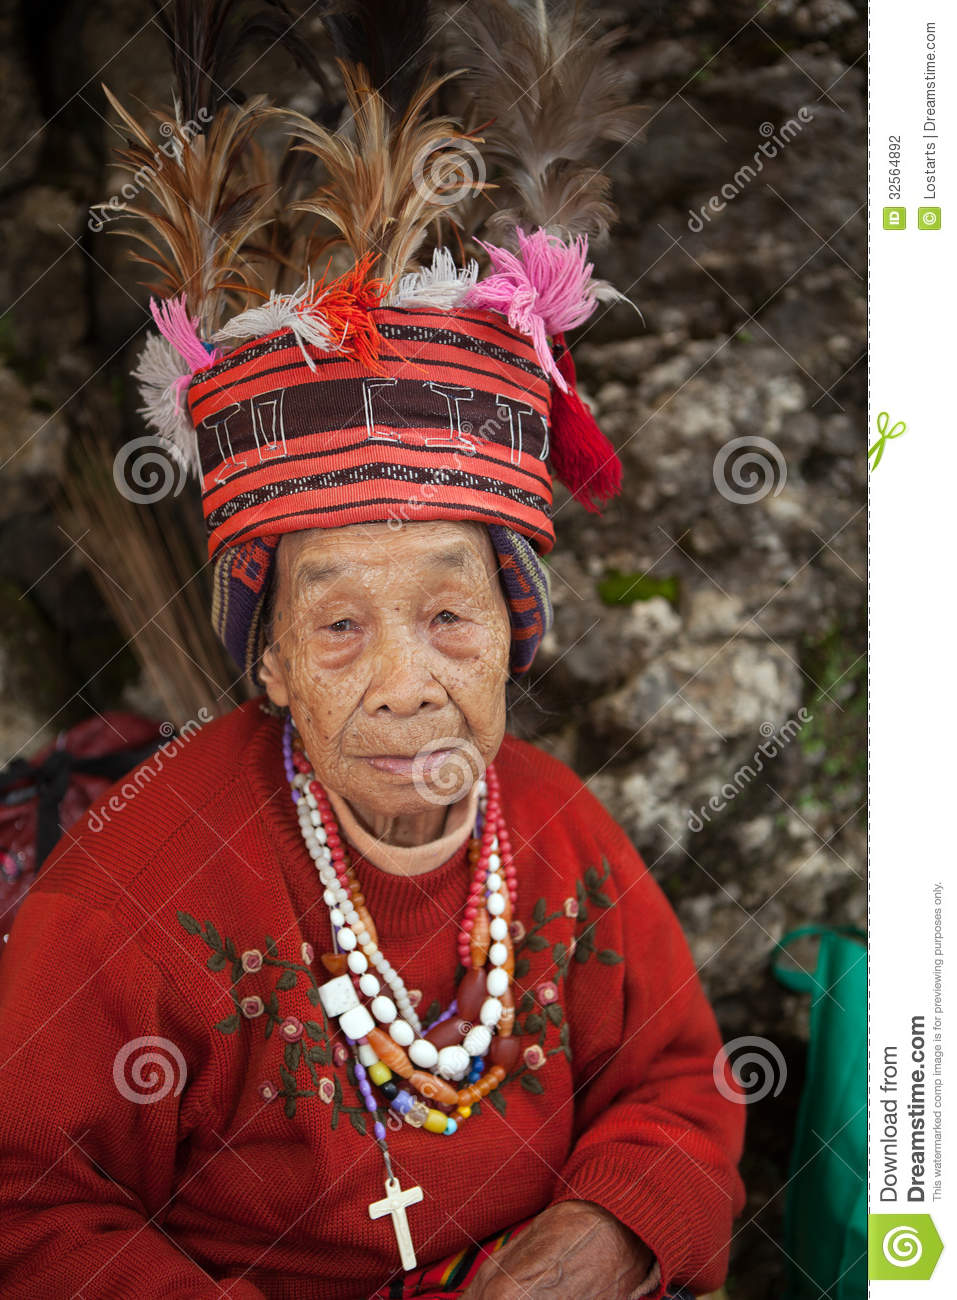 18 2013   A One Hundred Year Old Ifugao Filipino Woman Wearing Native